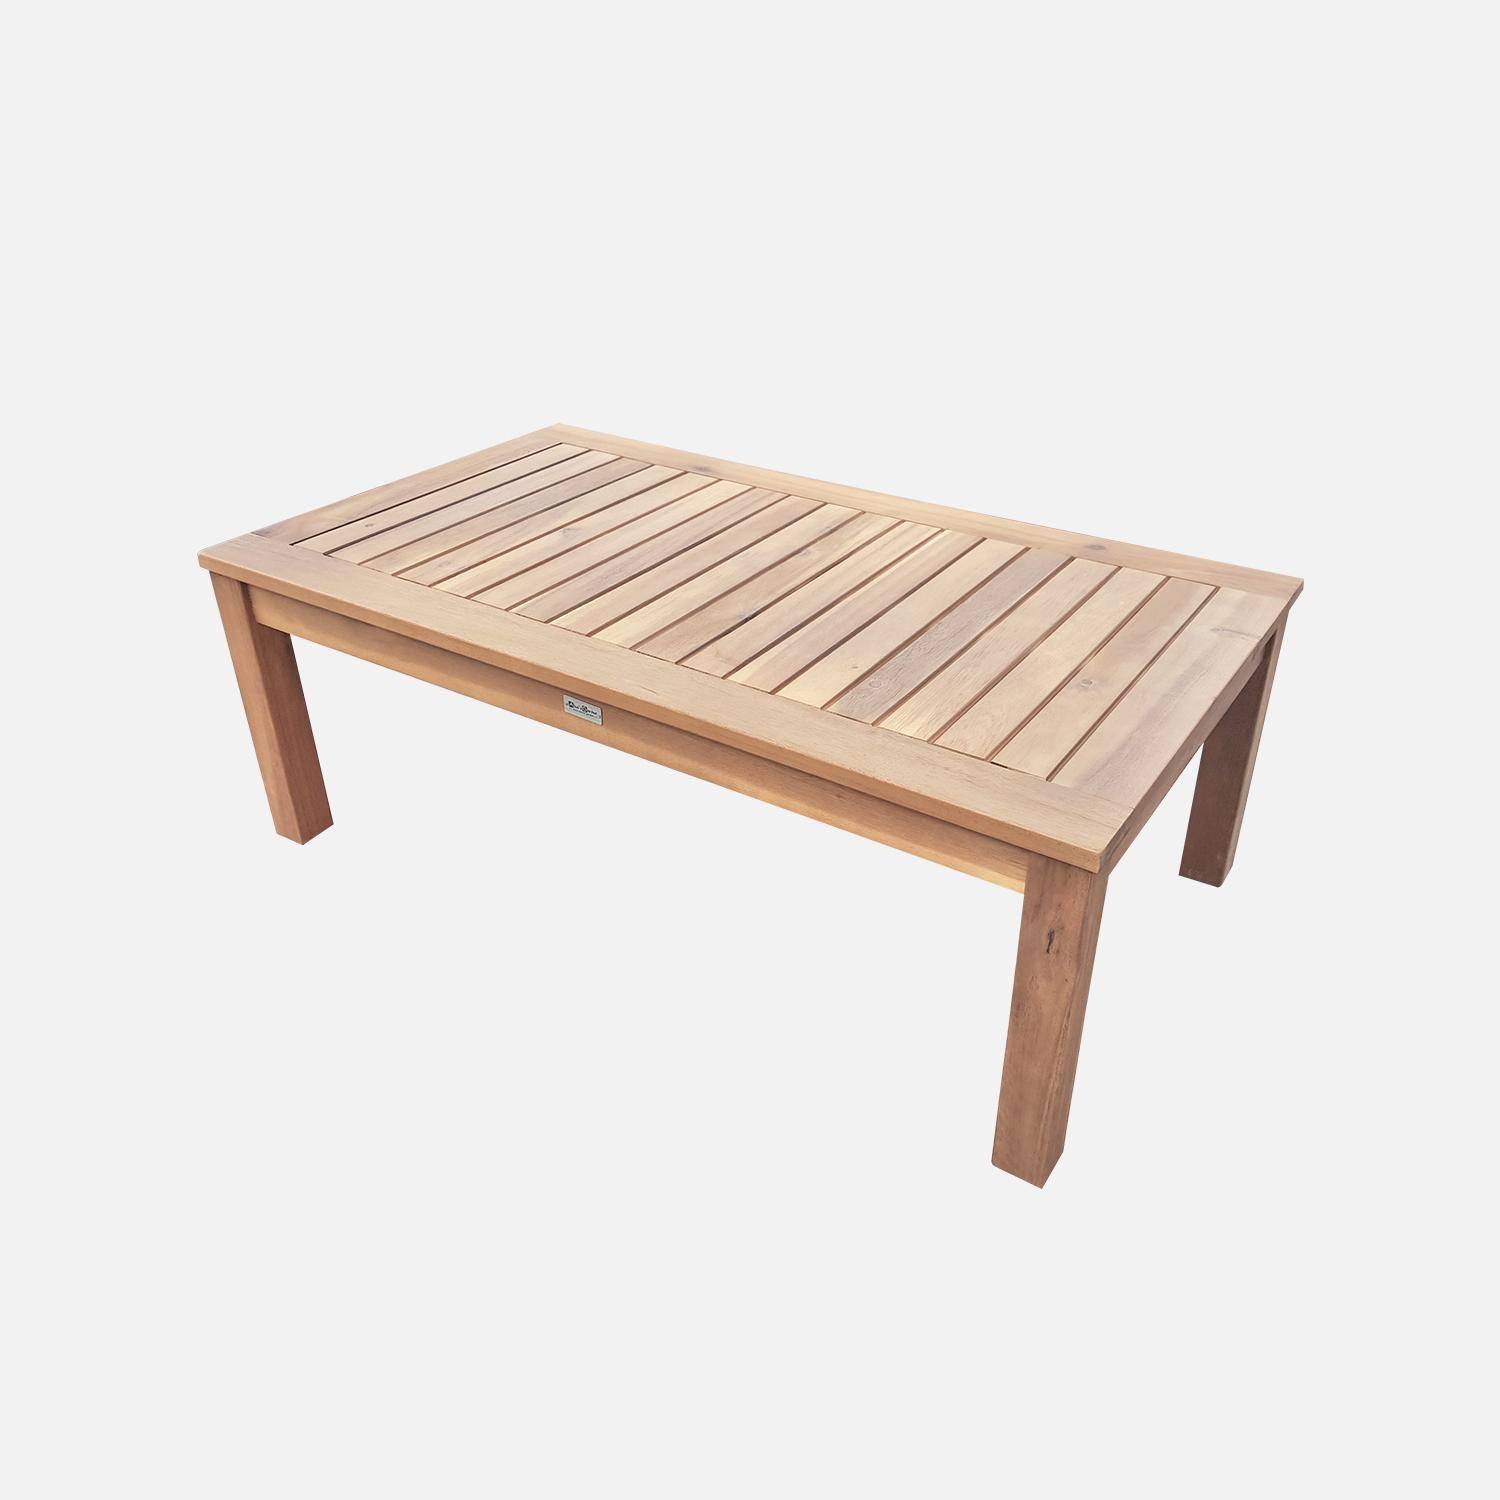 4-seater wooden garden sofa - Acacia wood sofa, armchairs and coffee table, designer piece  - Ushuaia - Grey,sweeek,Photo5